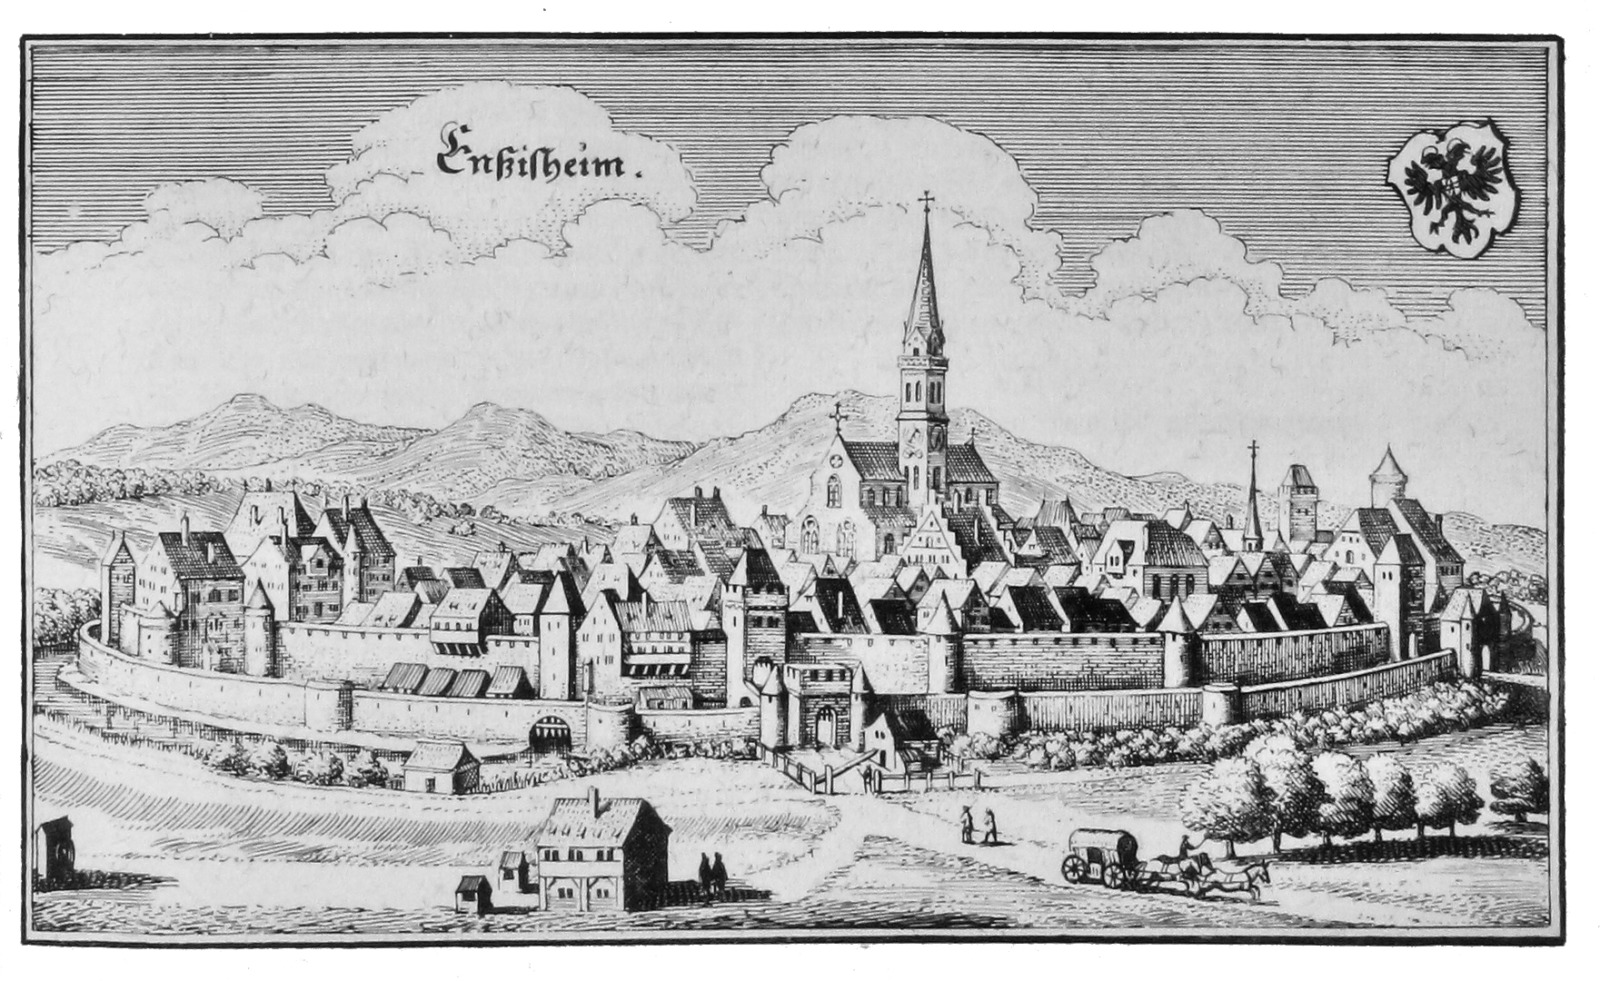 Ensisheim, capital of Anterior Austria, before the Thirty Years' War.